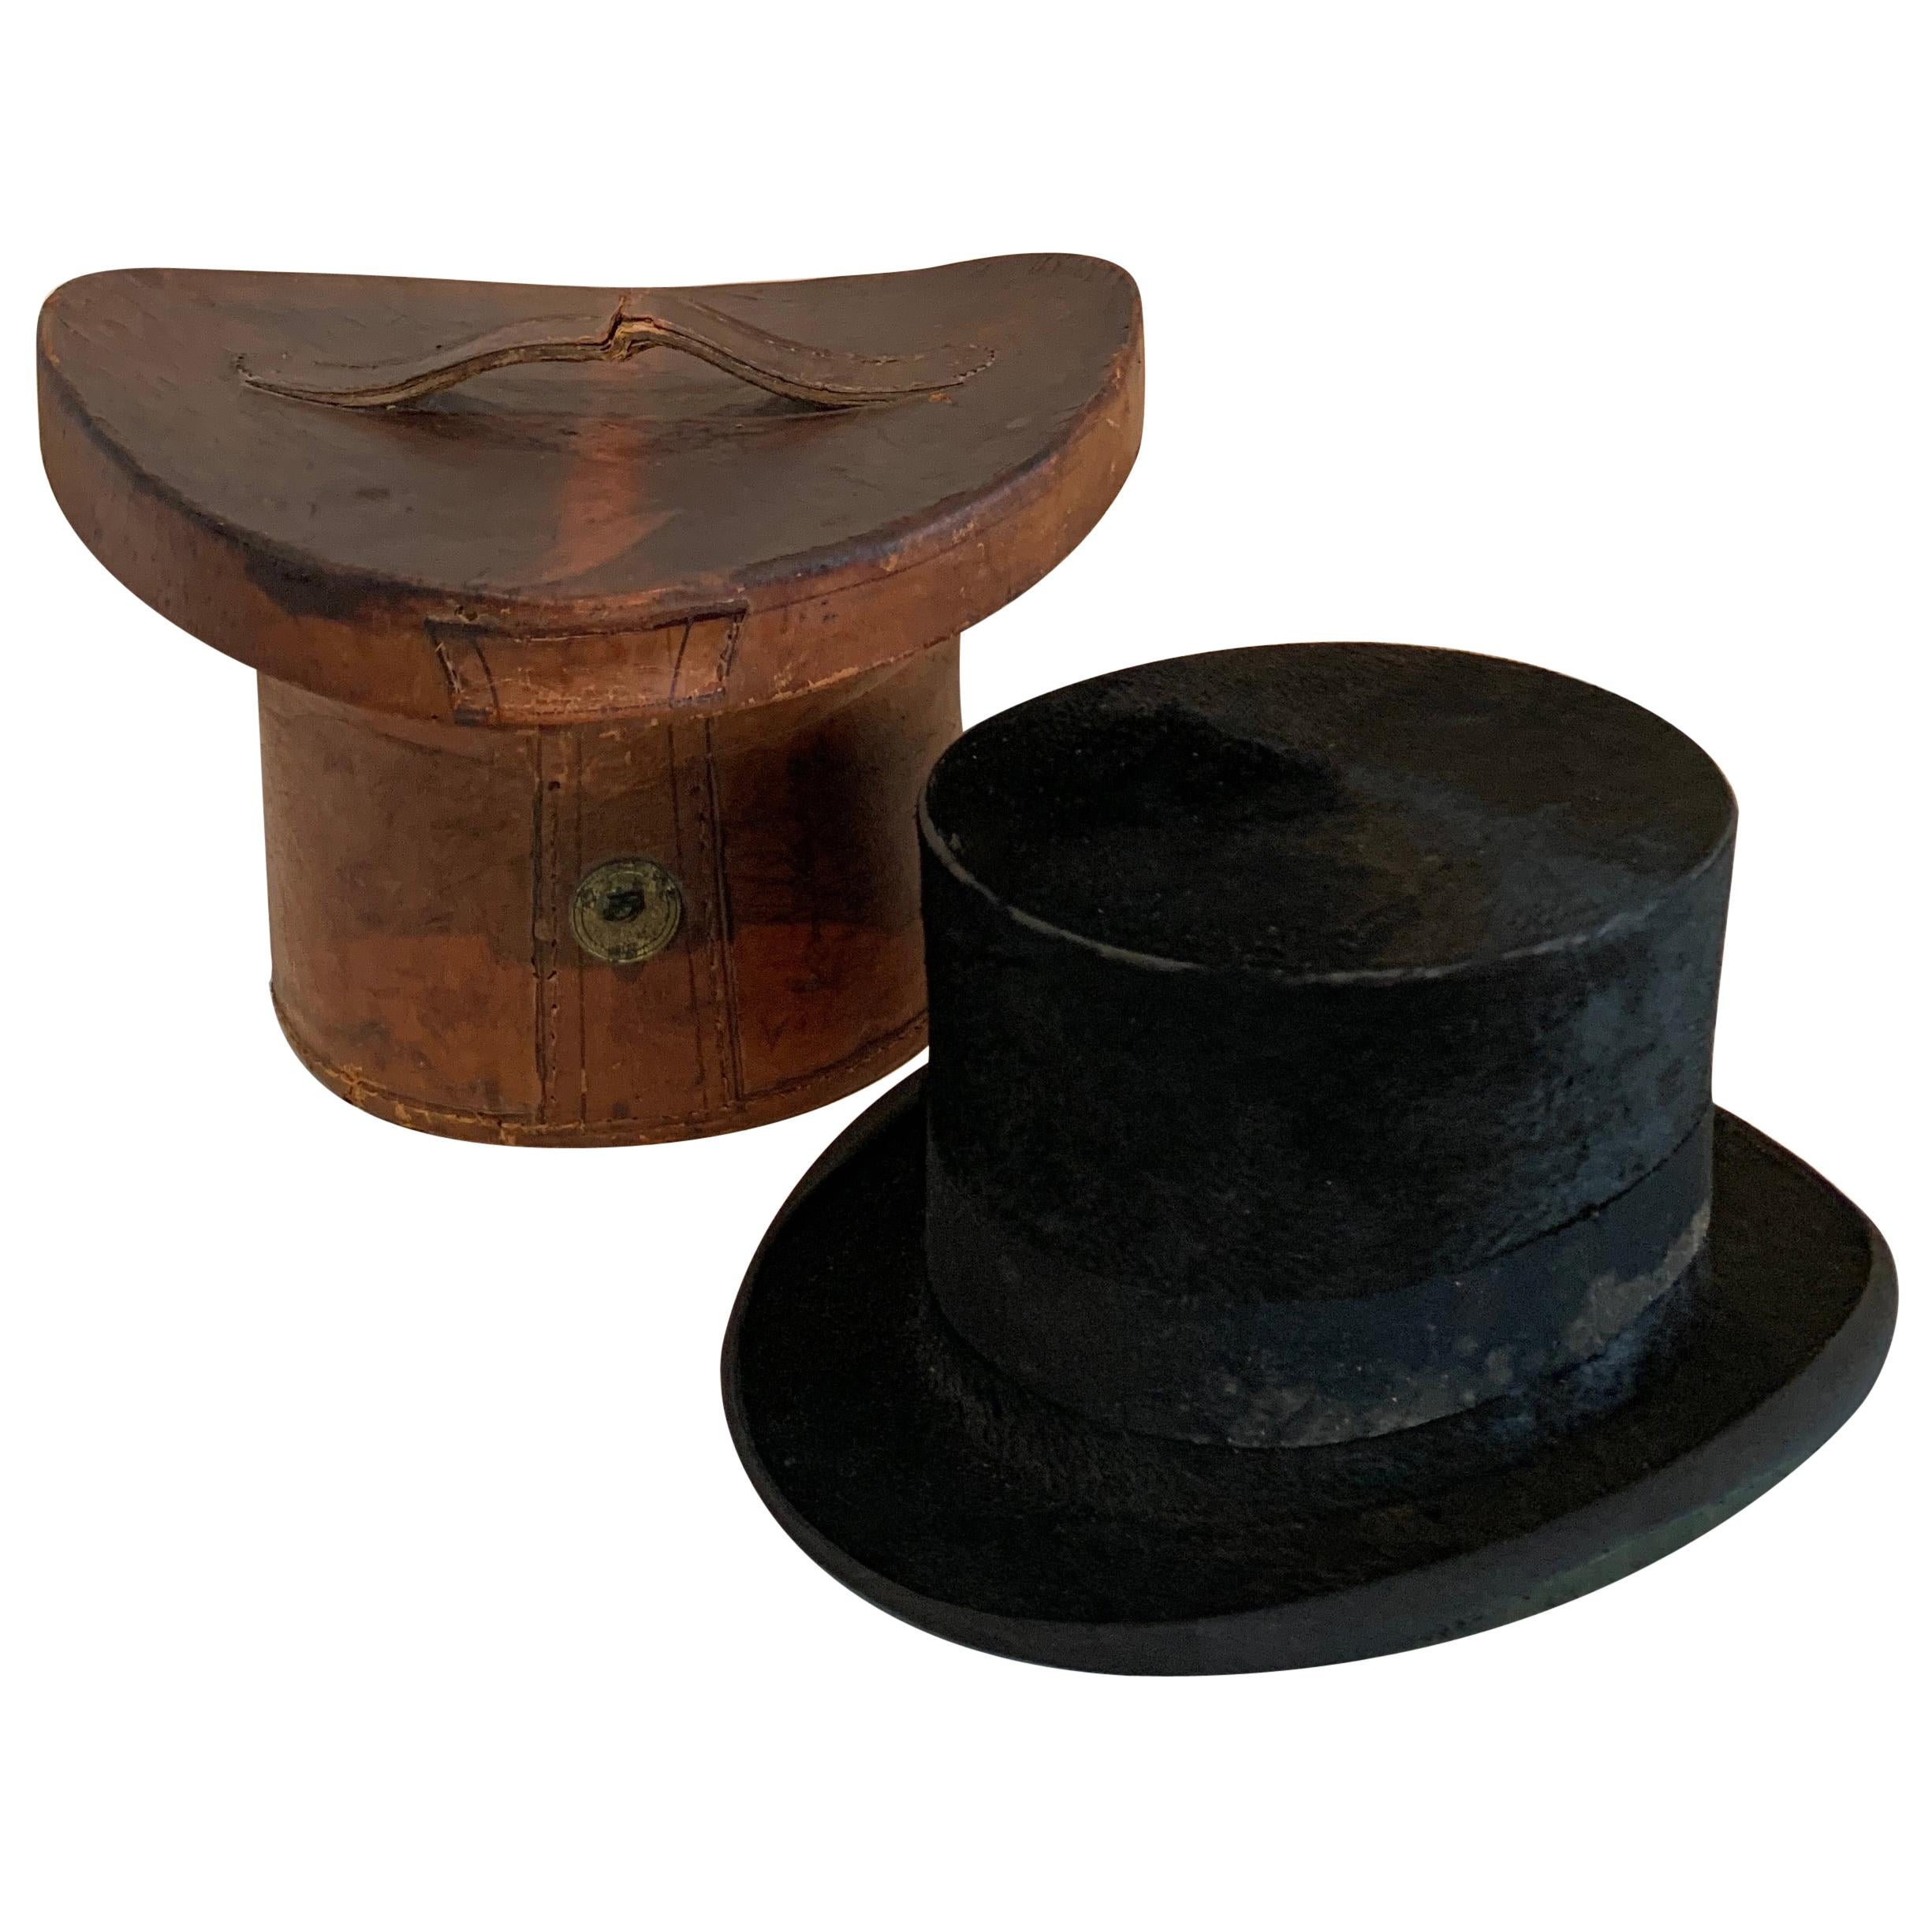 Vintage Top Hat  Antique Top Hat  Daily Mail Sandringham Hat   Steampunk Hat  Vintage Wedding Accessory